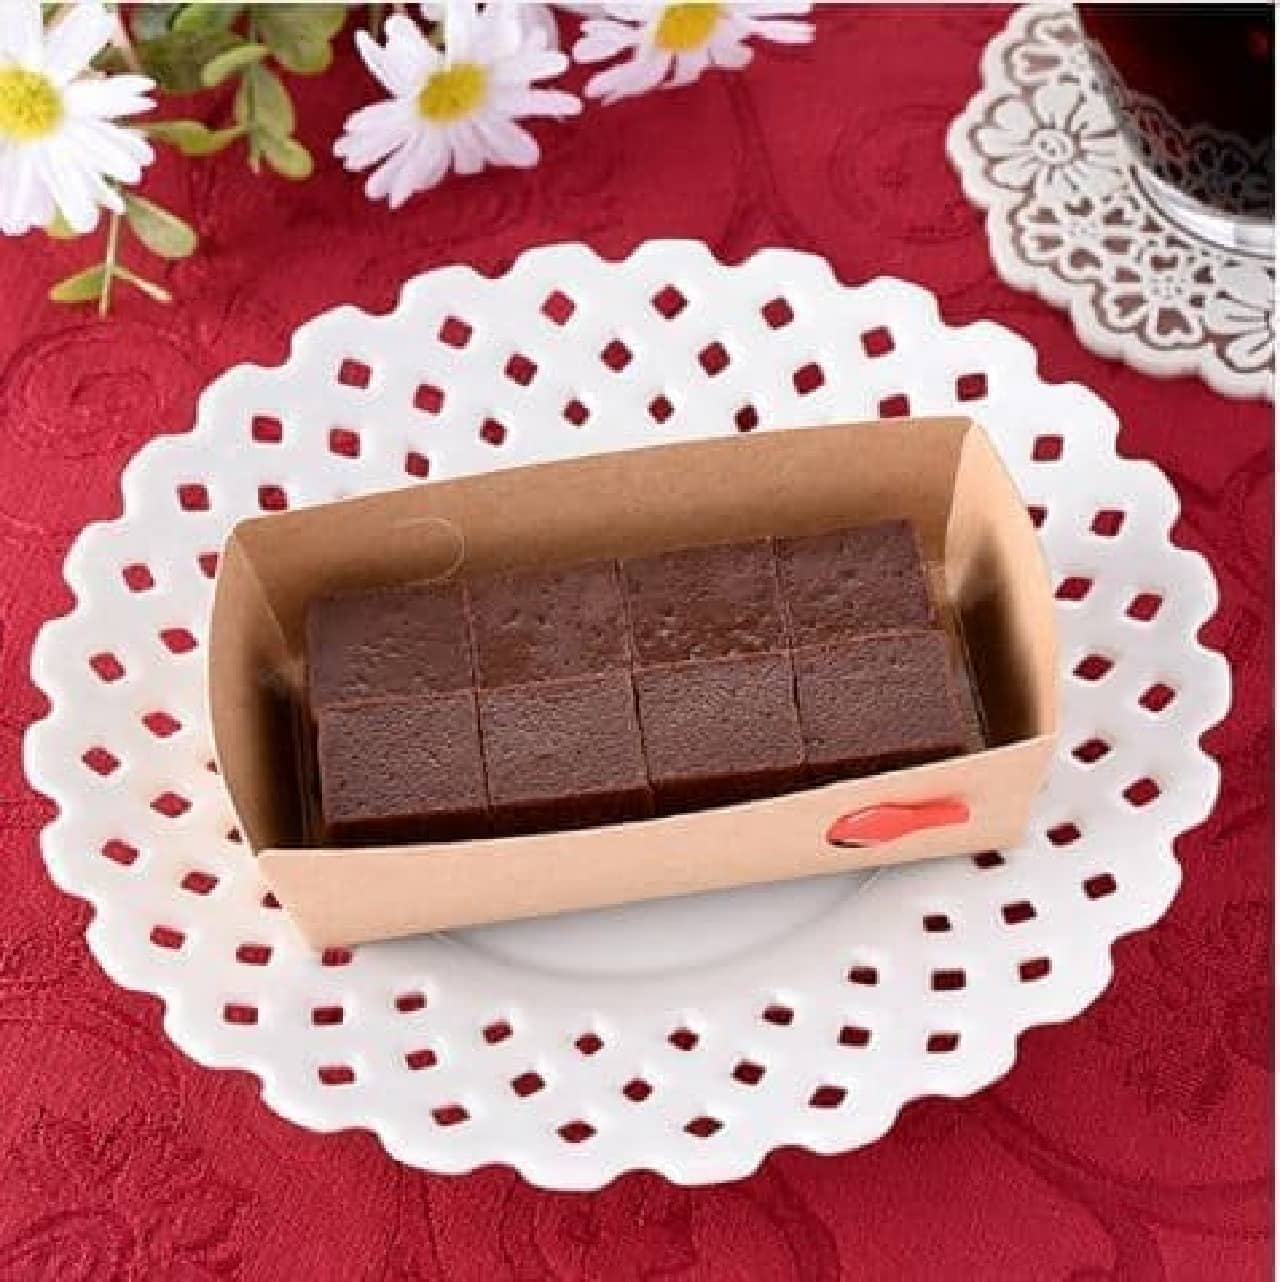 FamilyMart "Cube Gateau Chocolate"